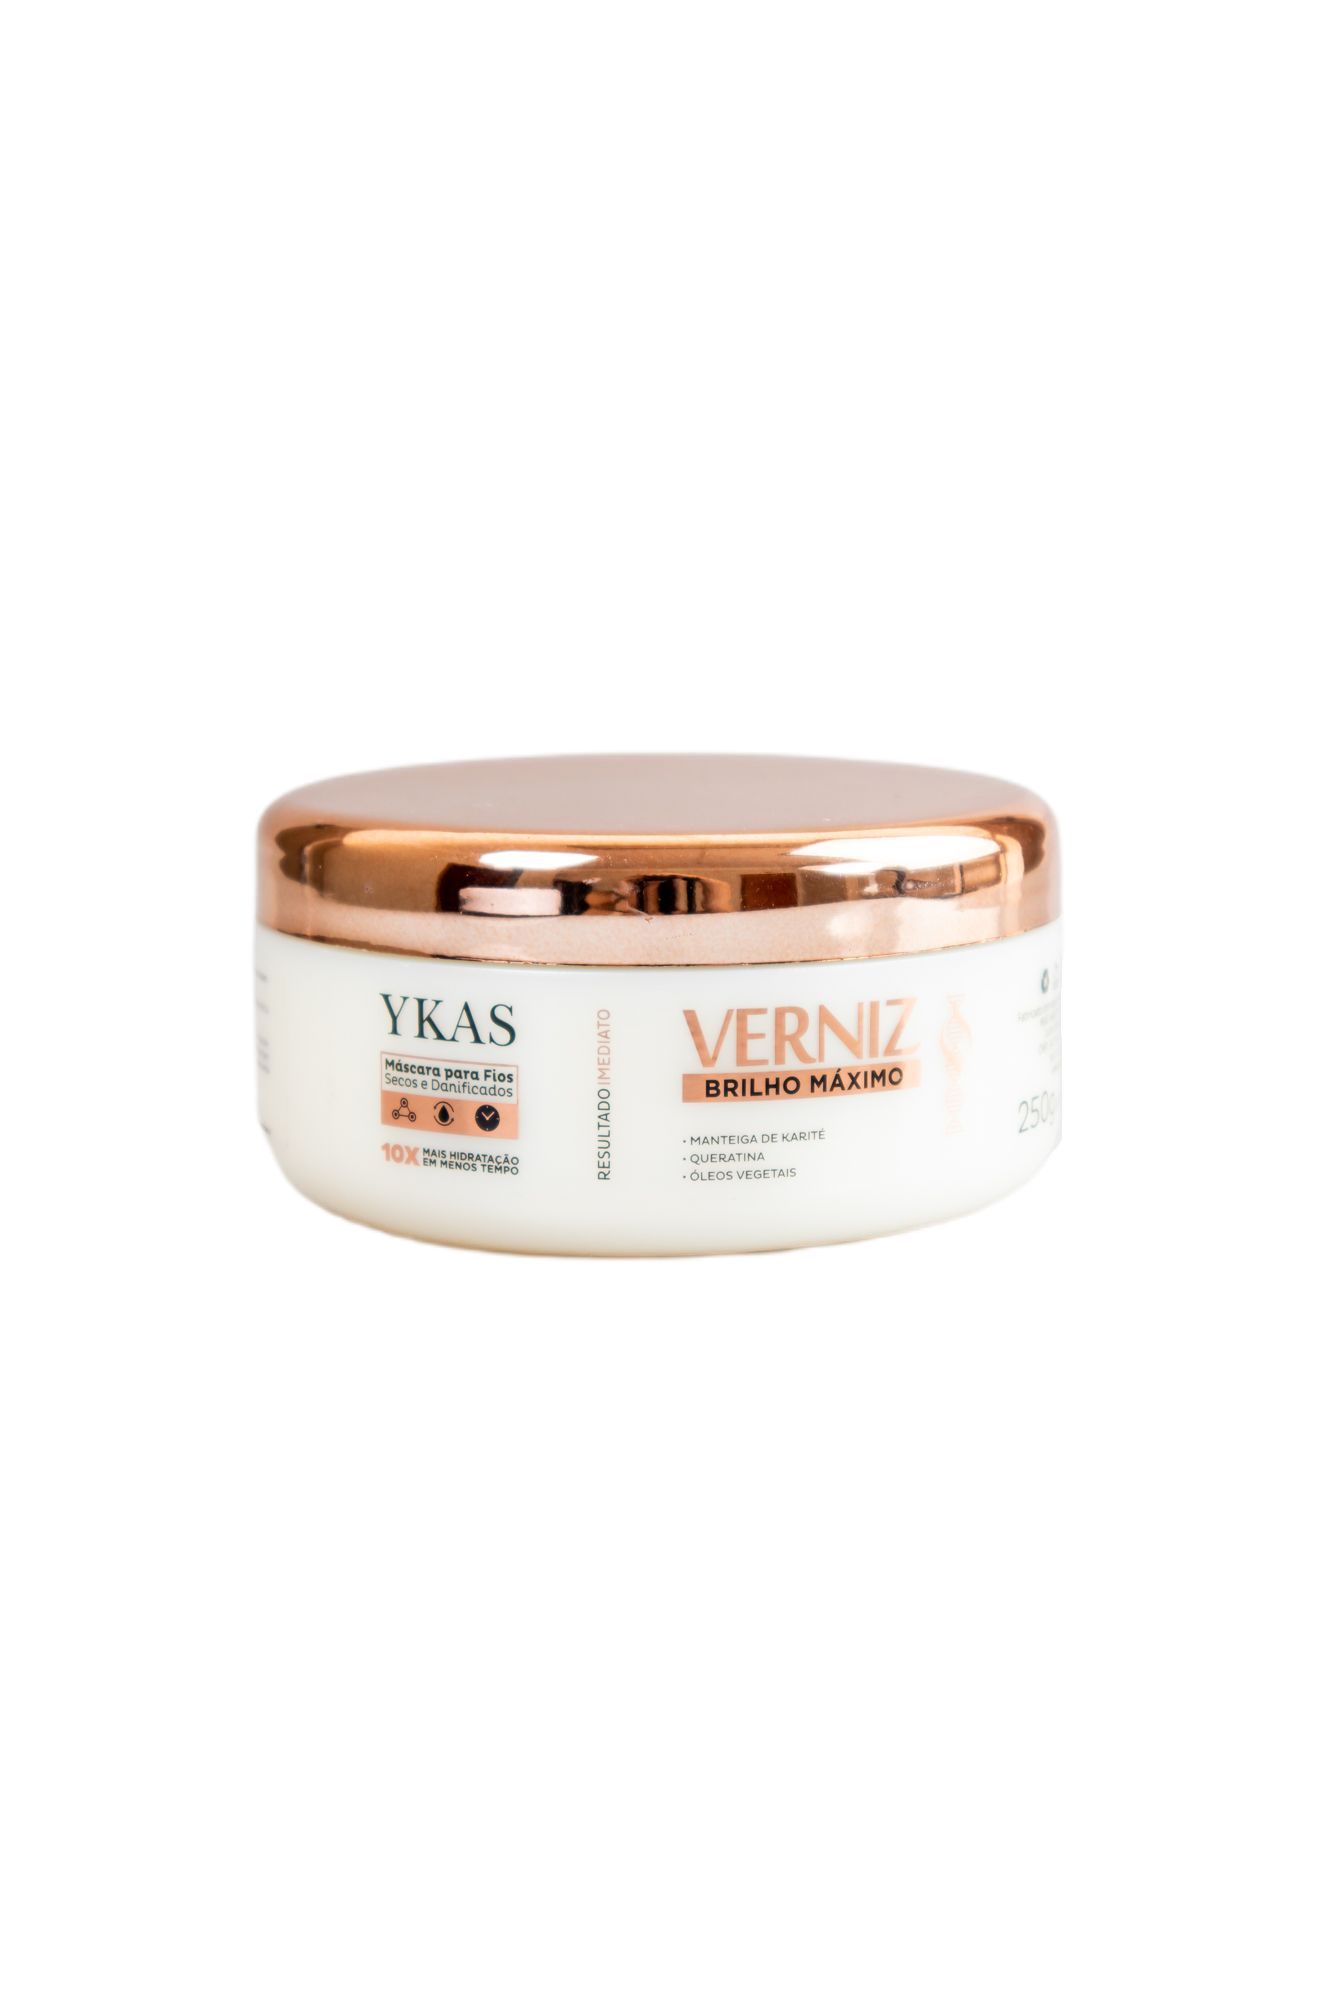 Ykas Hair Mask Varnish Bath Immediate Keratin Shea Butter Oils Hair Treatment Mask 250g - Ykas